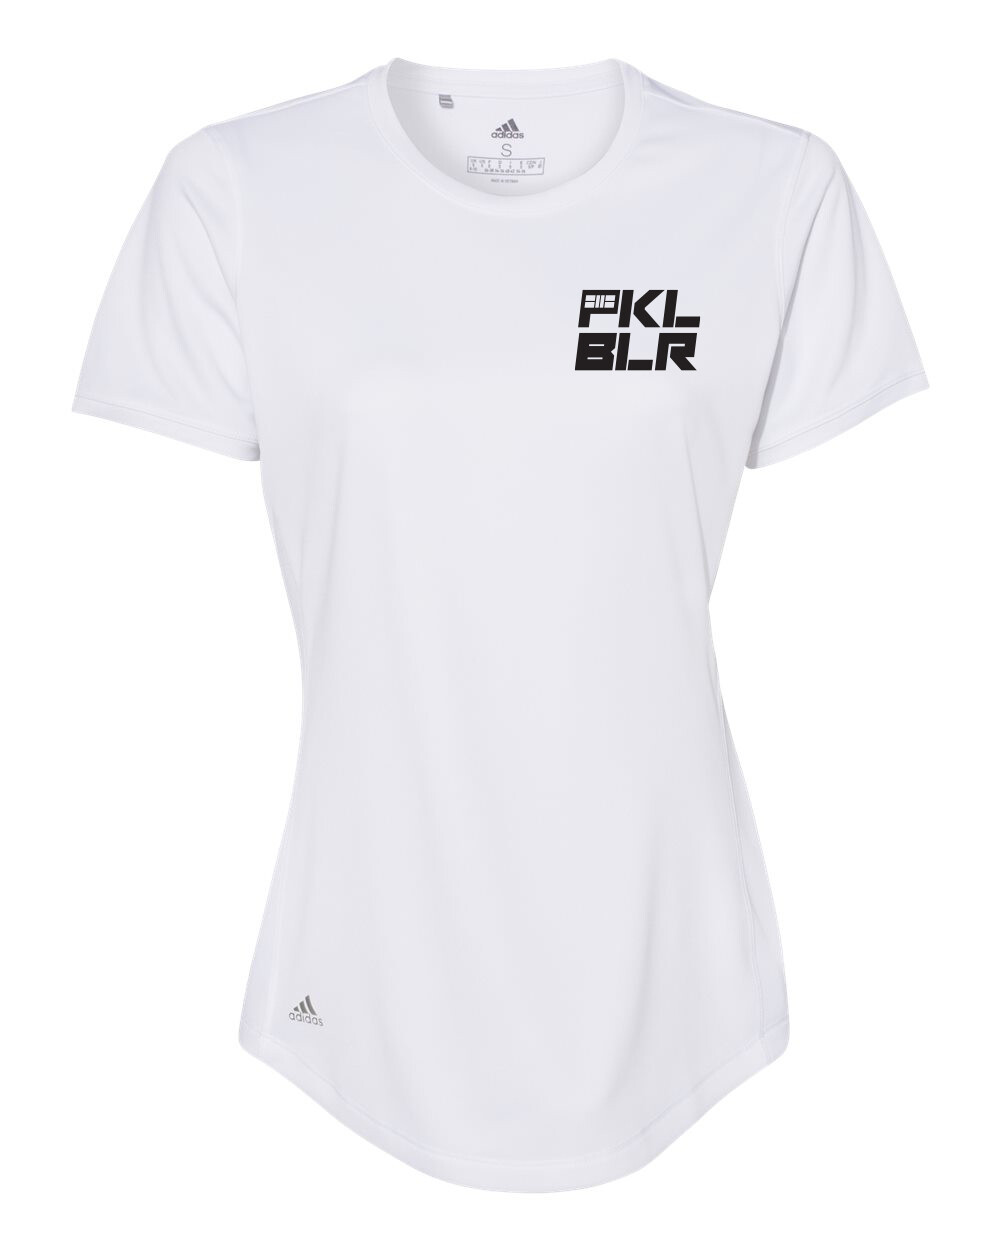 Adidas Women's Pickleball T-Shirt, 2-Sided